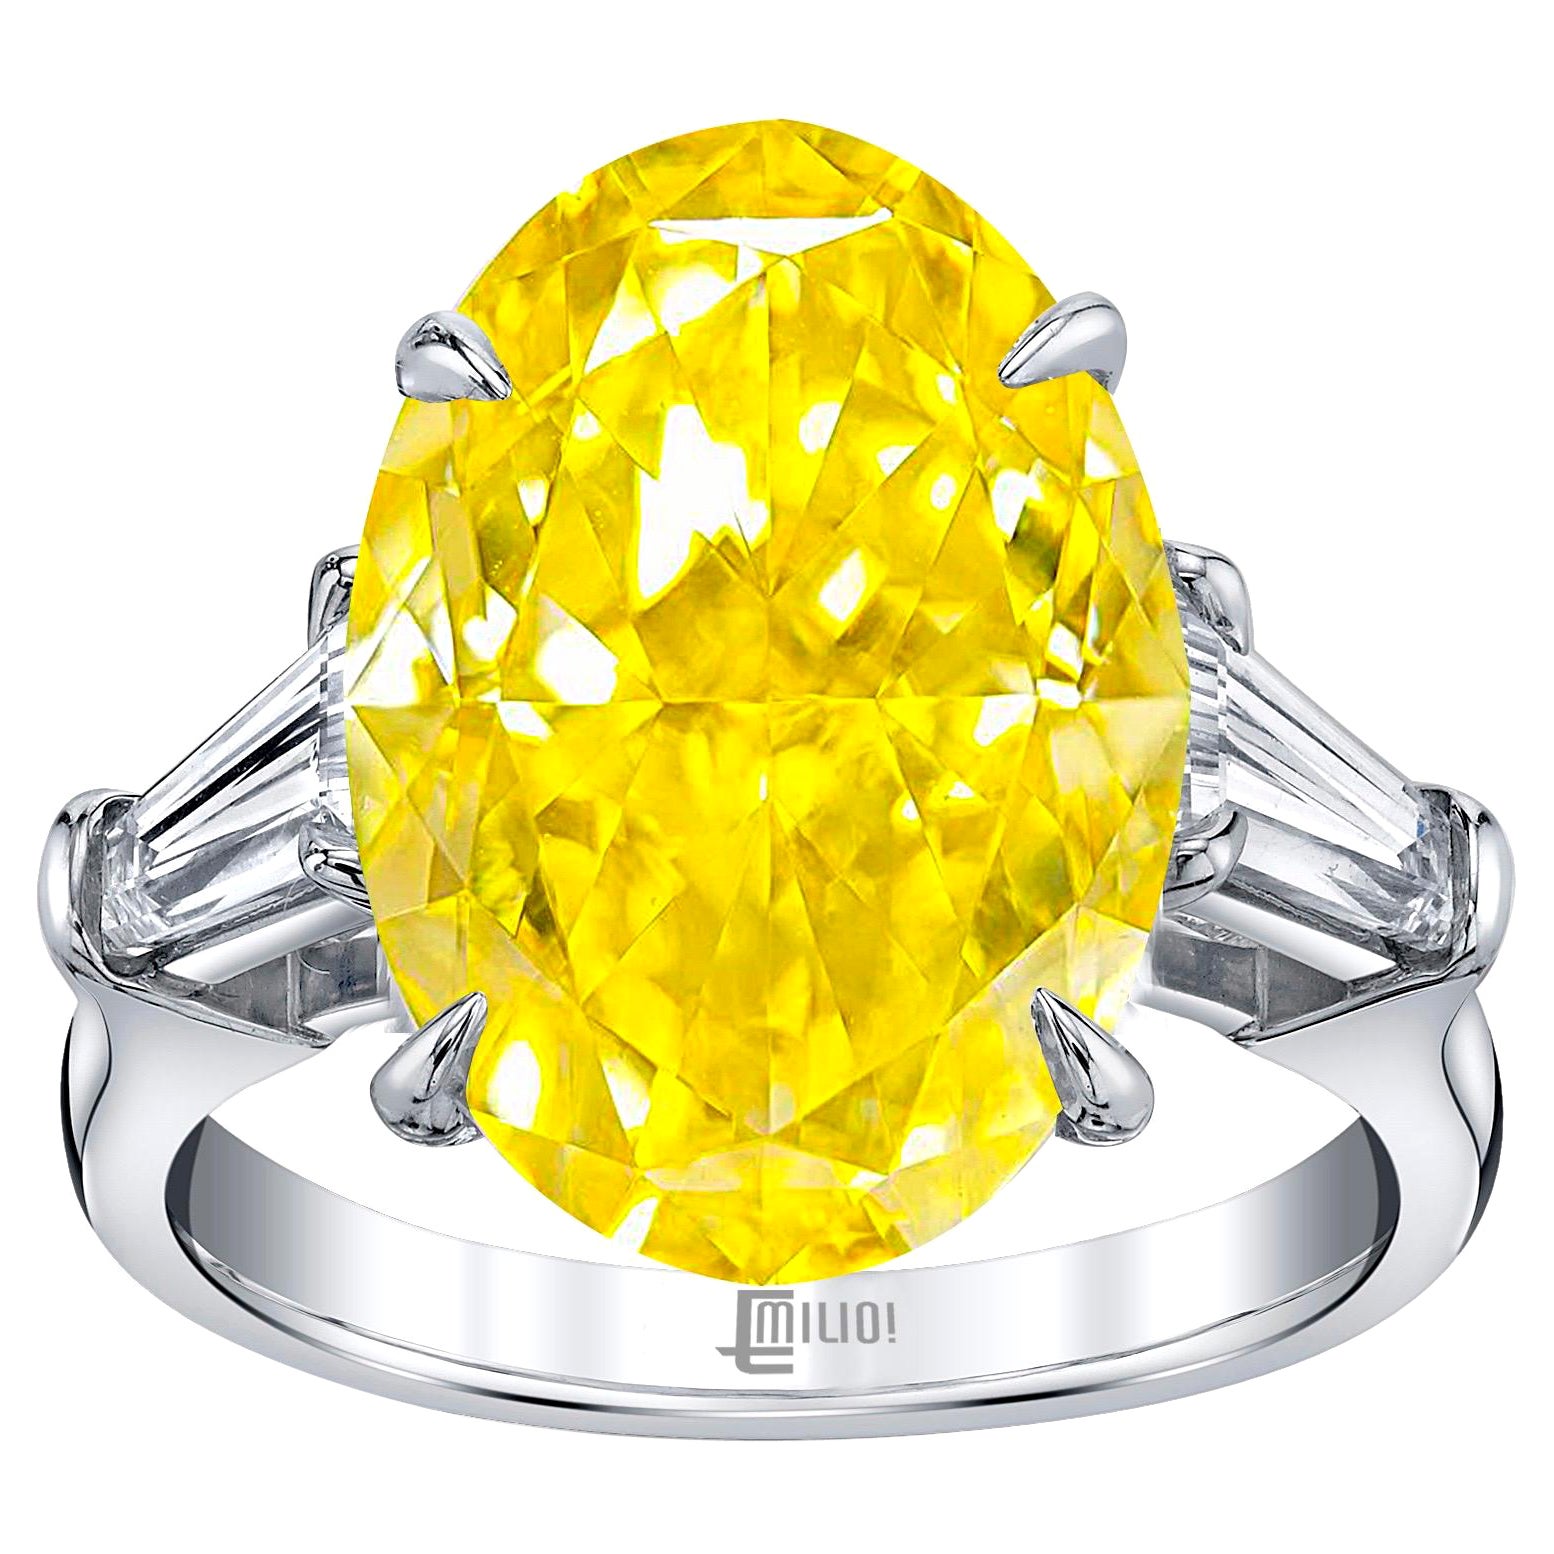 Emilio Jewelry GIA Certified 4.00 Carat Vivid Yellow Diamond Ring